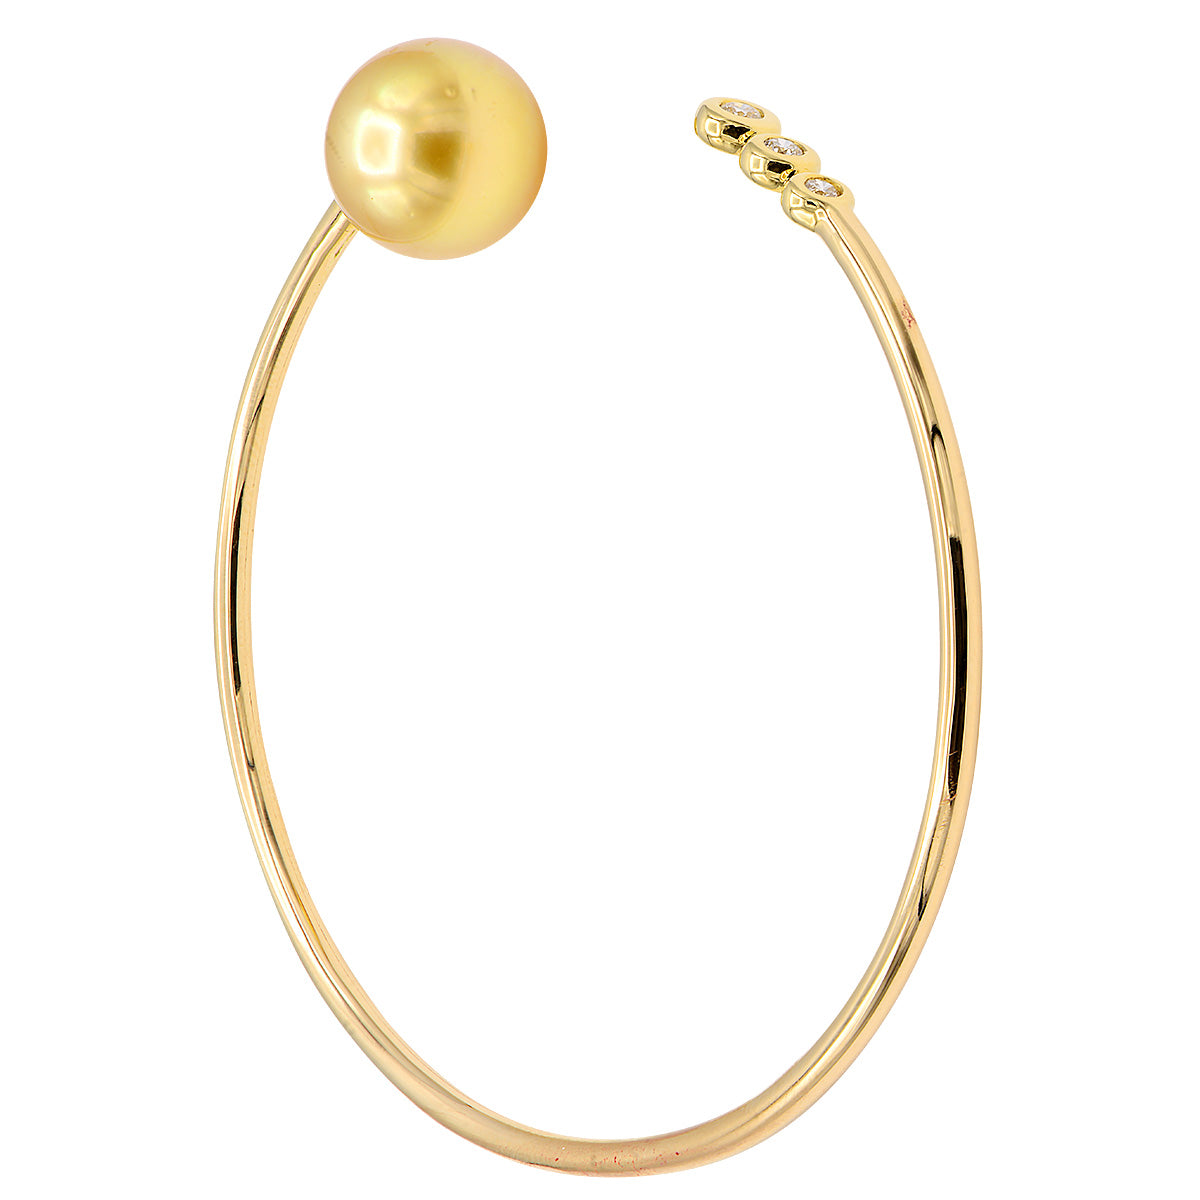 18KY Golden South Sea Pearl Bracelet, 11-12mm